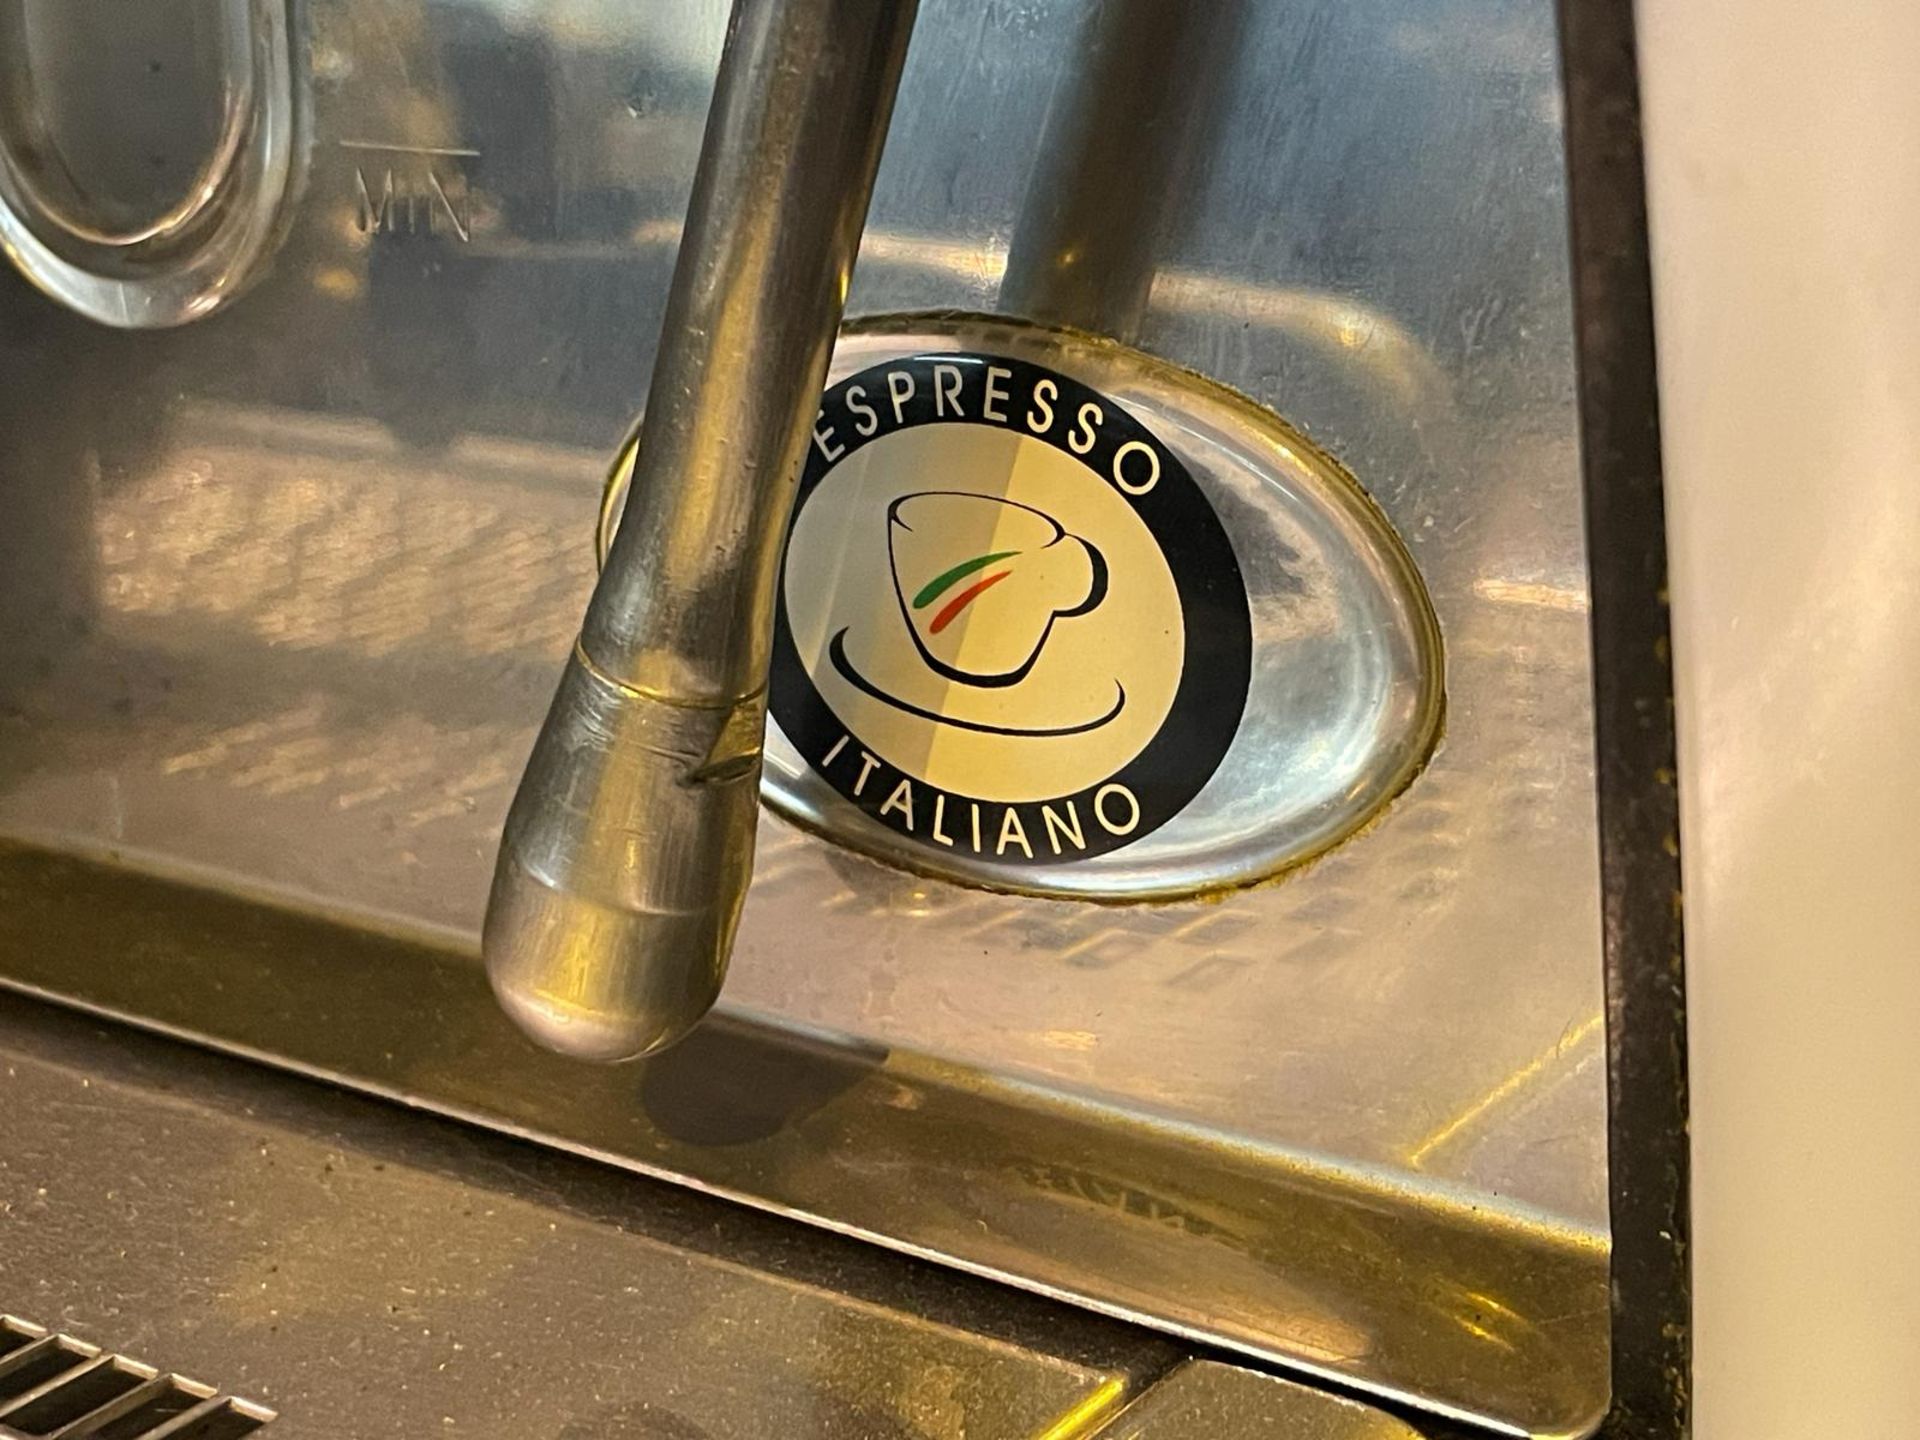 1 x Polaris Wega 3 Group Commercial Espresso Coffee Machine - Stainless Steel / Black Exterior - Image 8 of 11